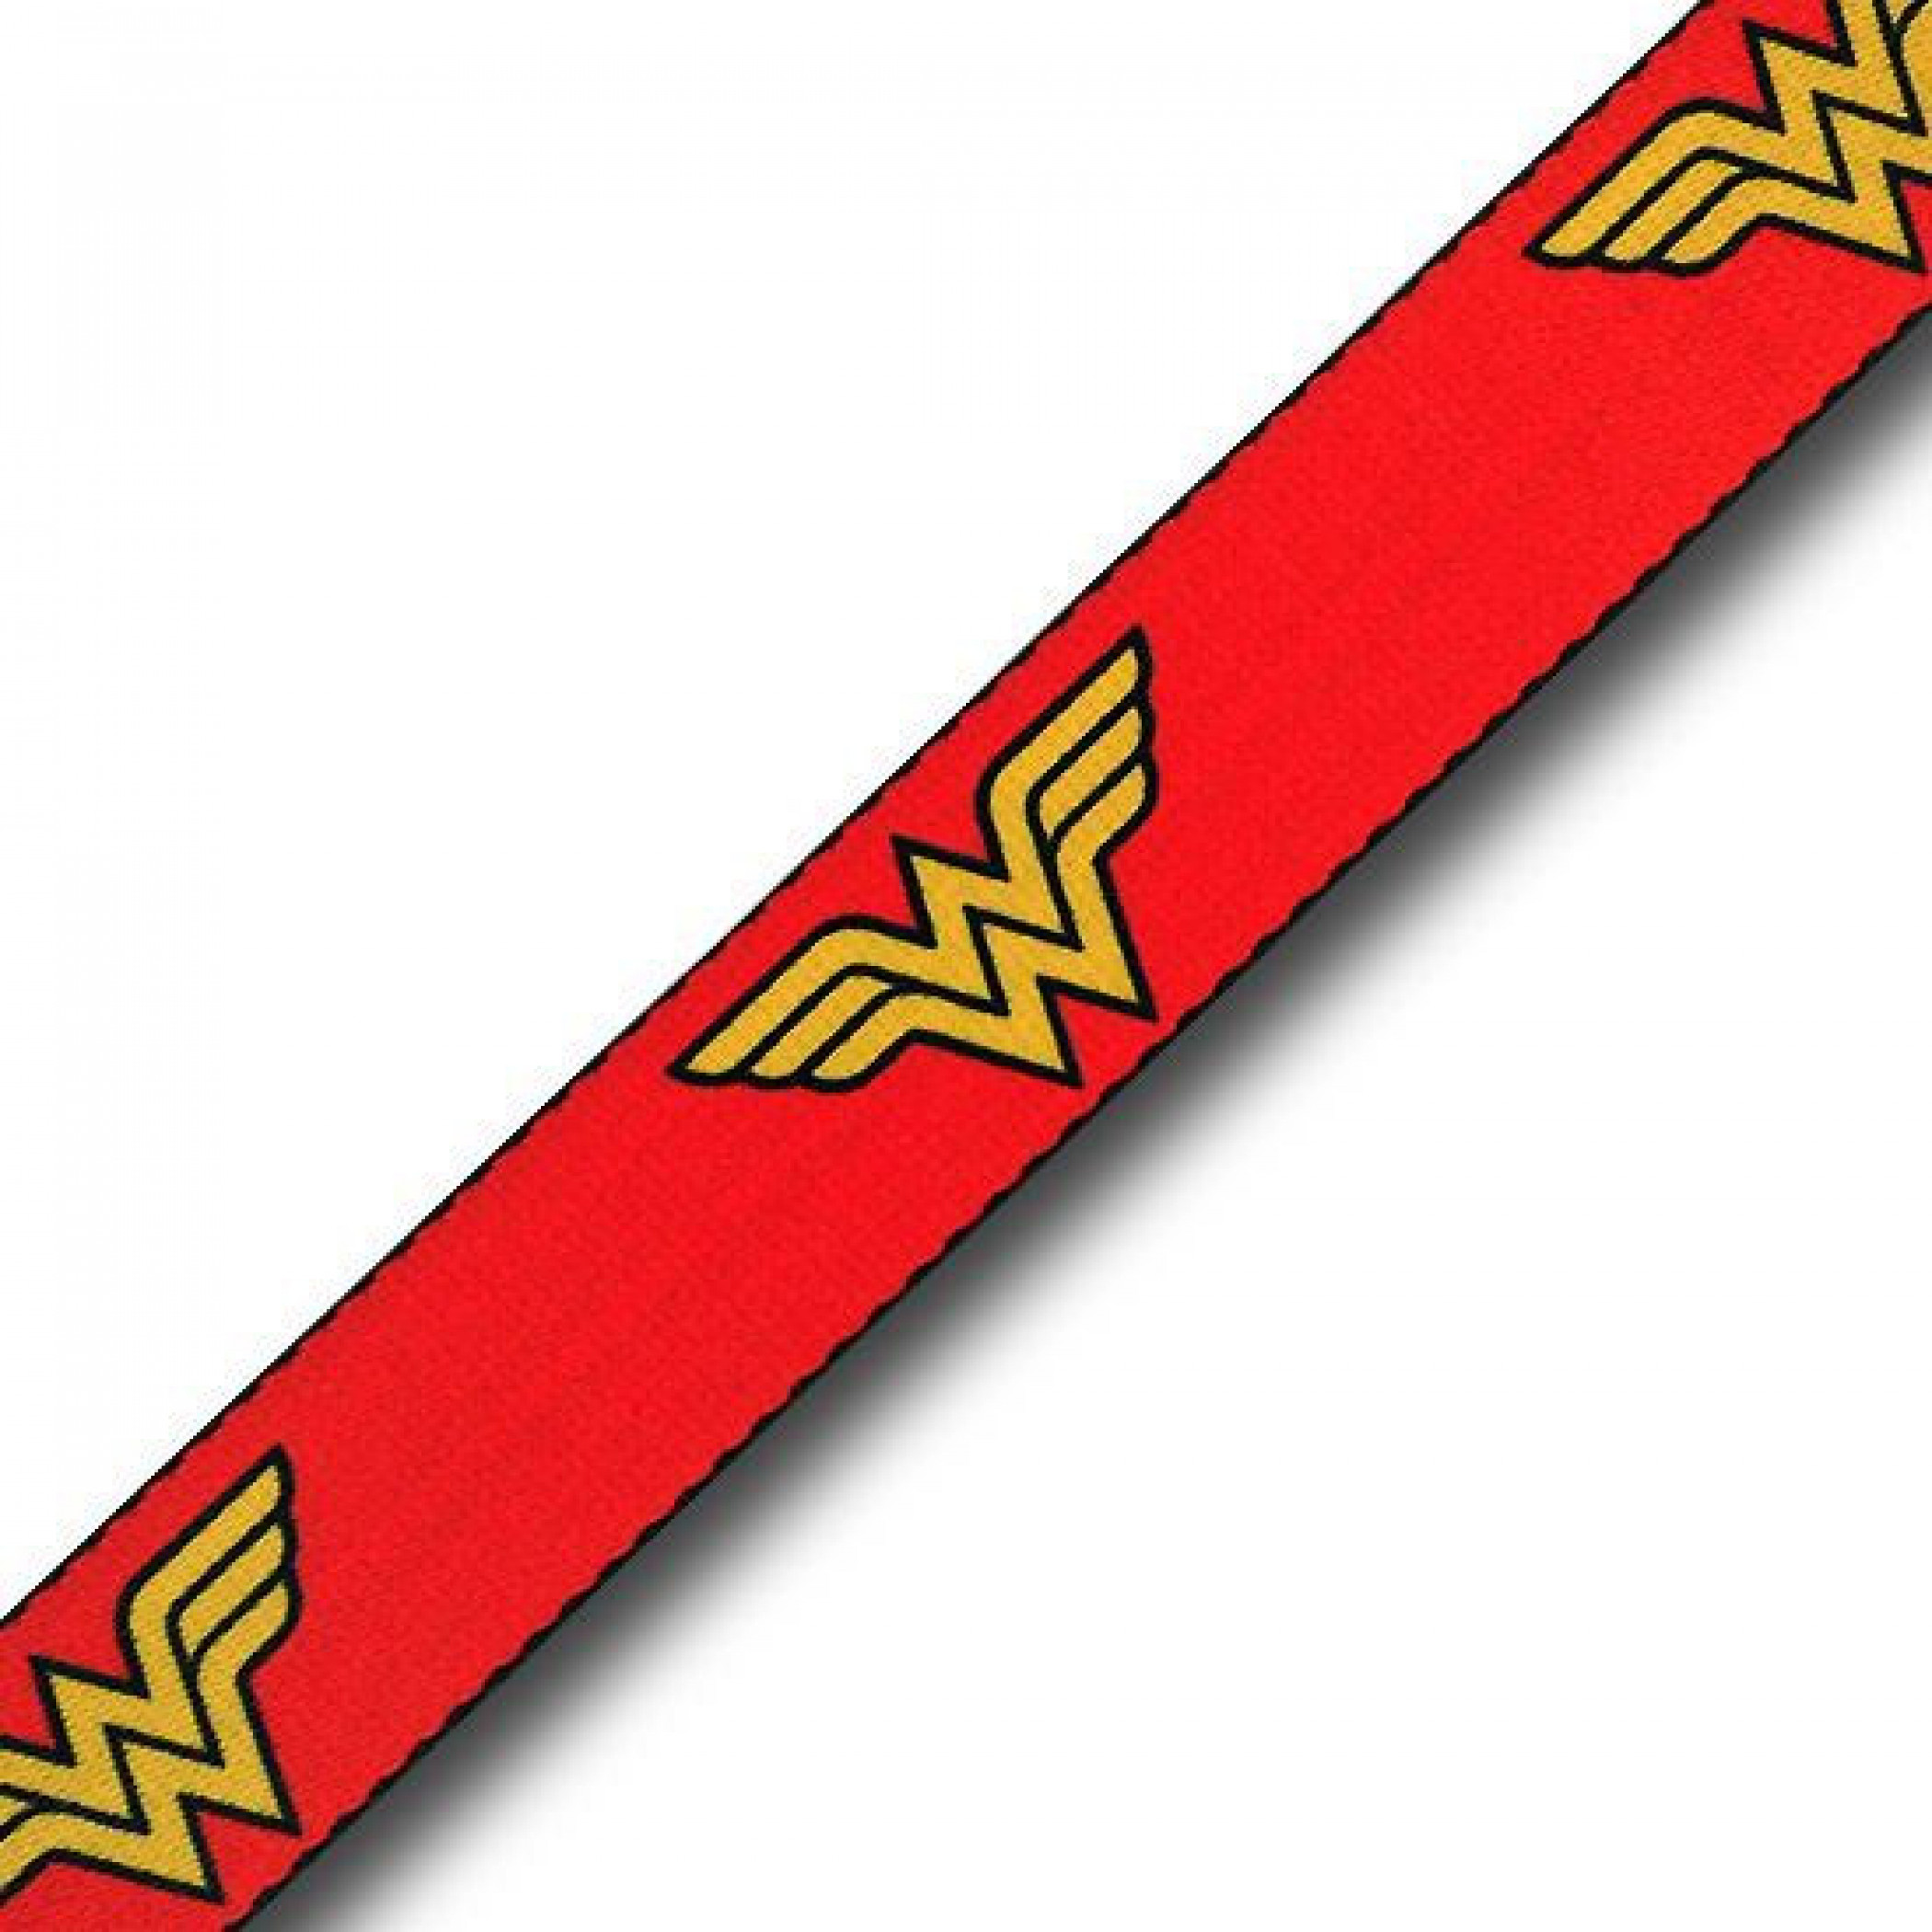 Wonder Woman Symbols Red Adult Web Belt